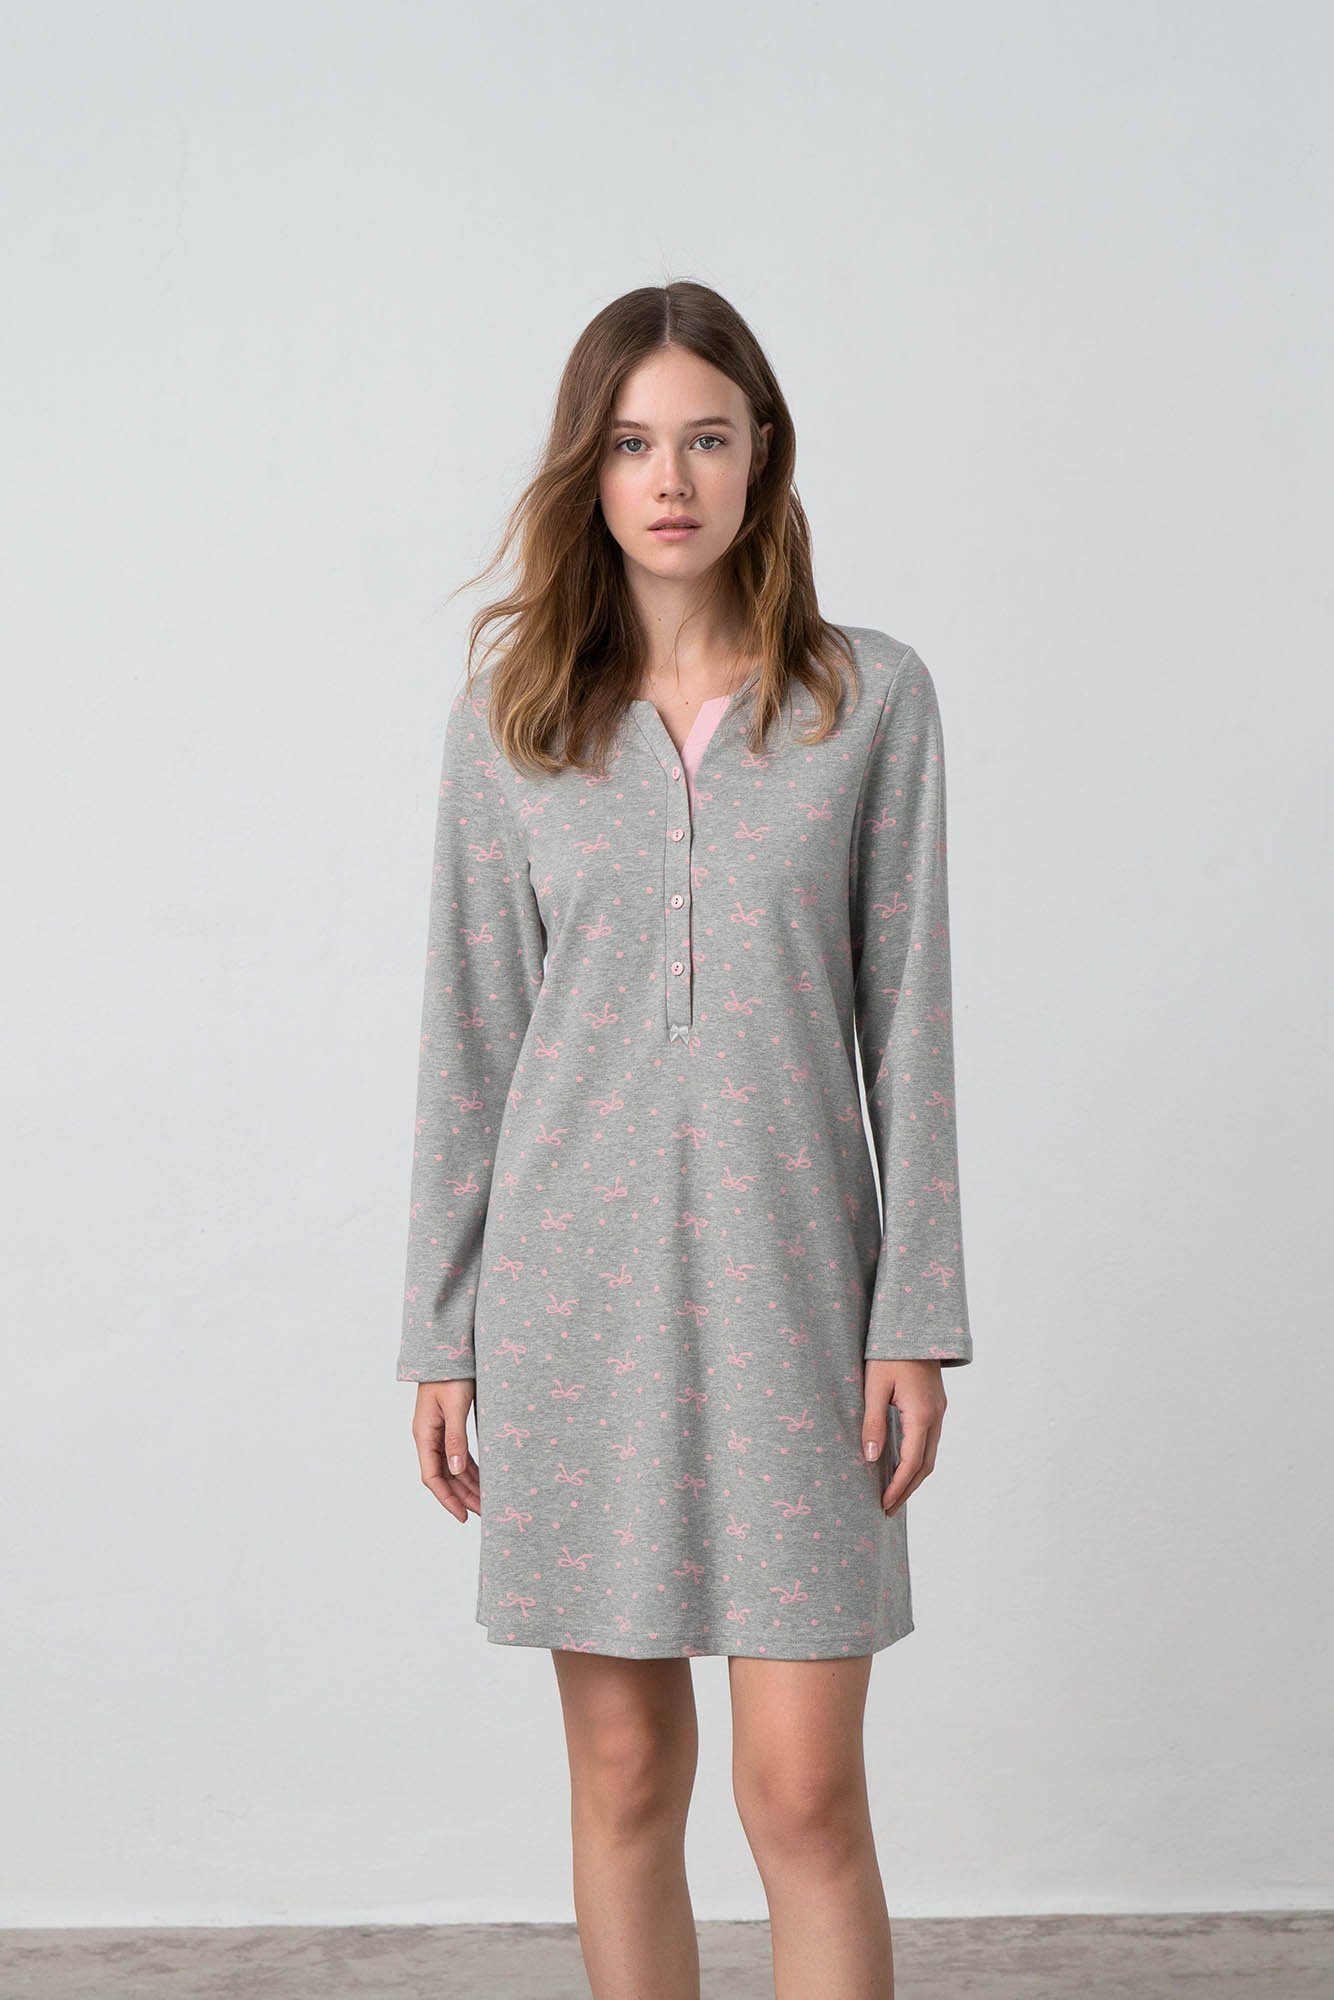 Vamp Nachthemd (Set, 1-tlg., Set) Damen Sleepshirt 90cm, Nachthemd  Baumwolle Langarm, grau-rosa online kaufen | OTTO